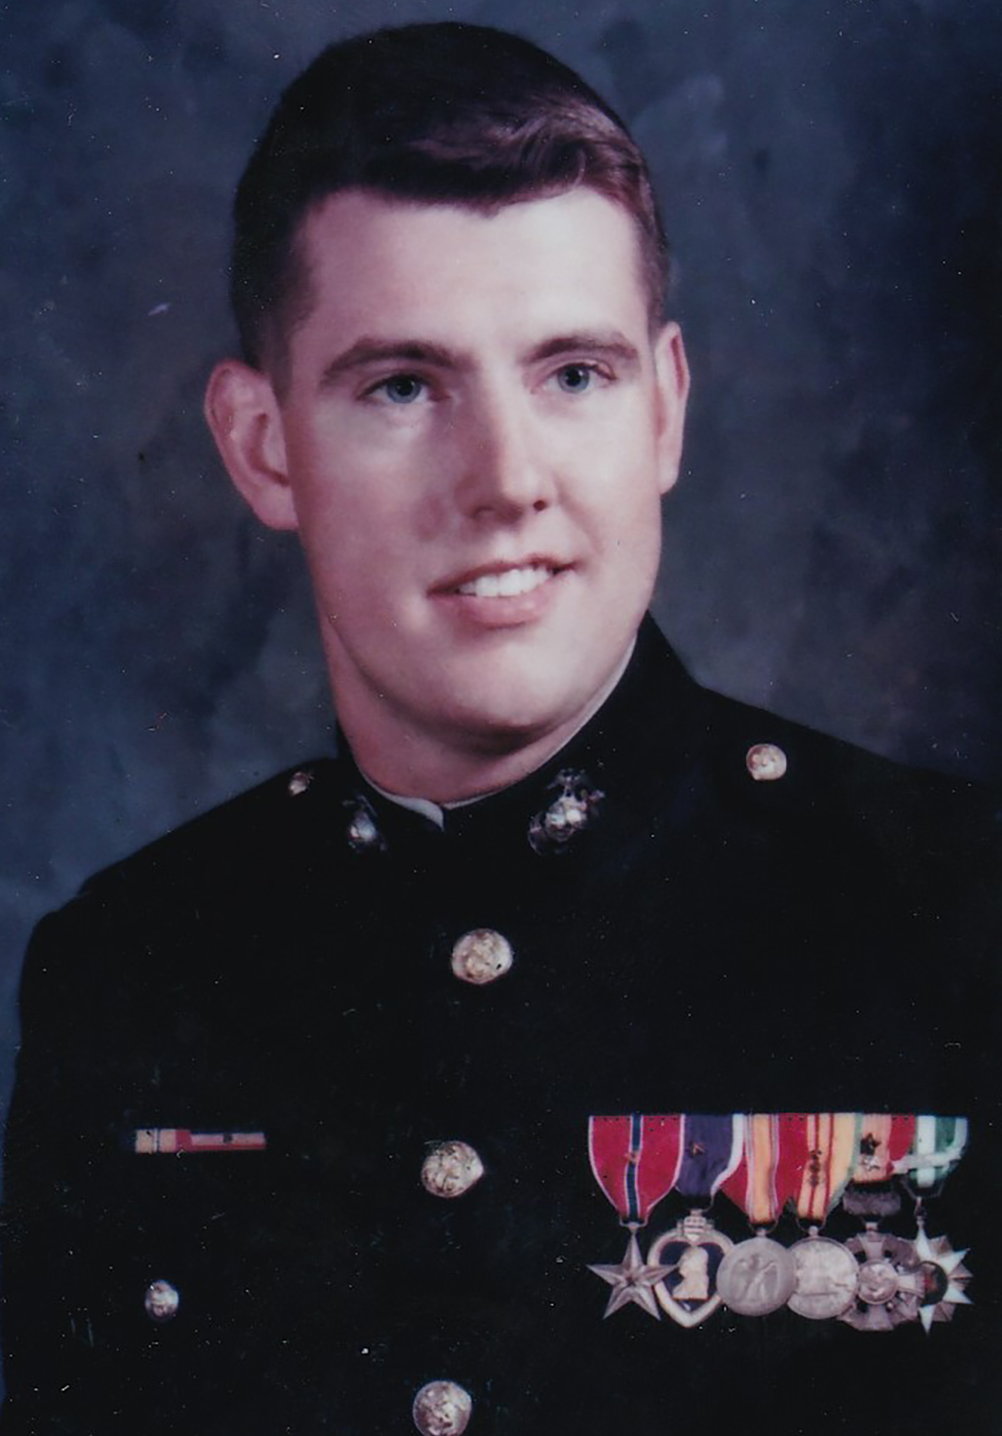 Carlton Crenshaw in military uniform